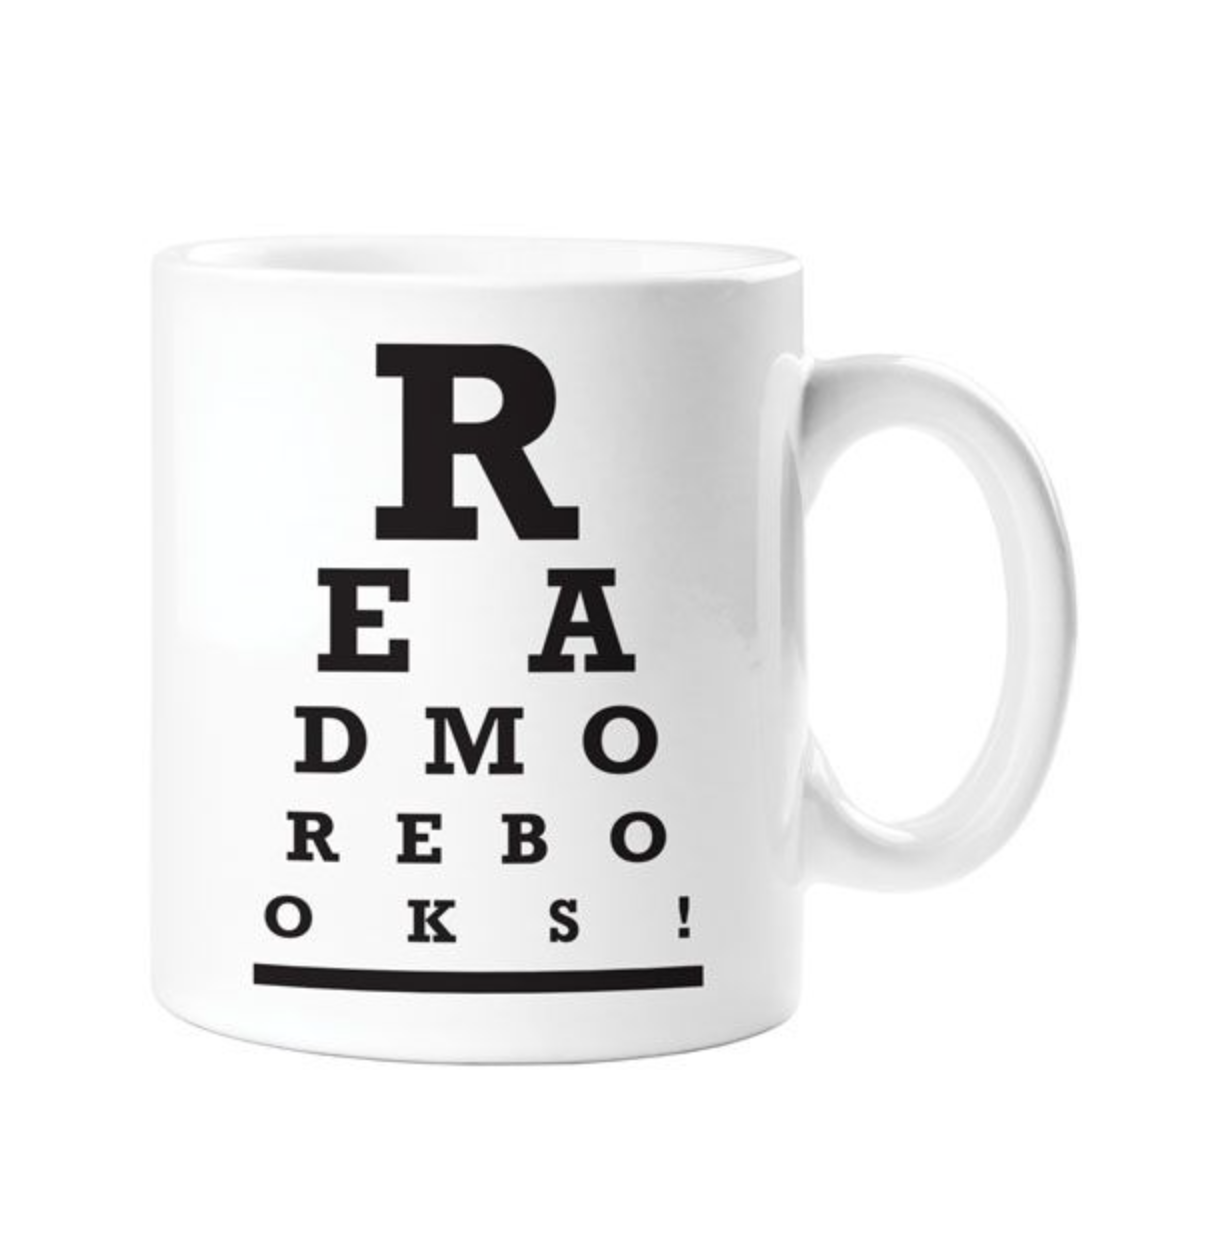 Read More Books! Mug